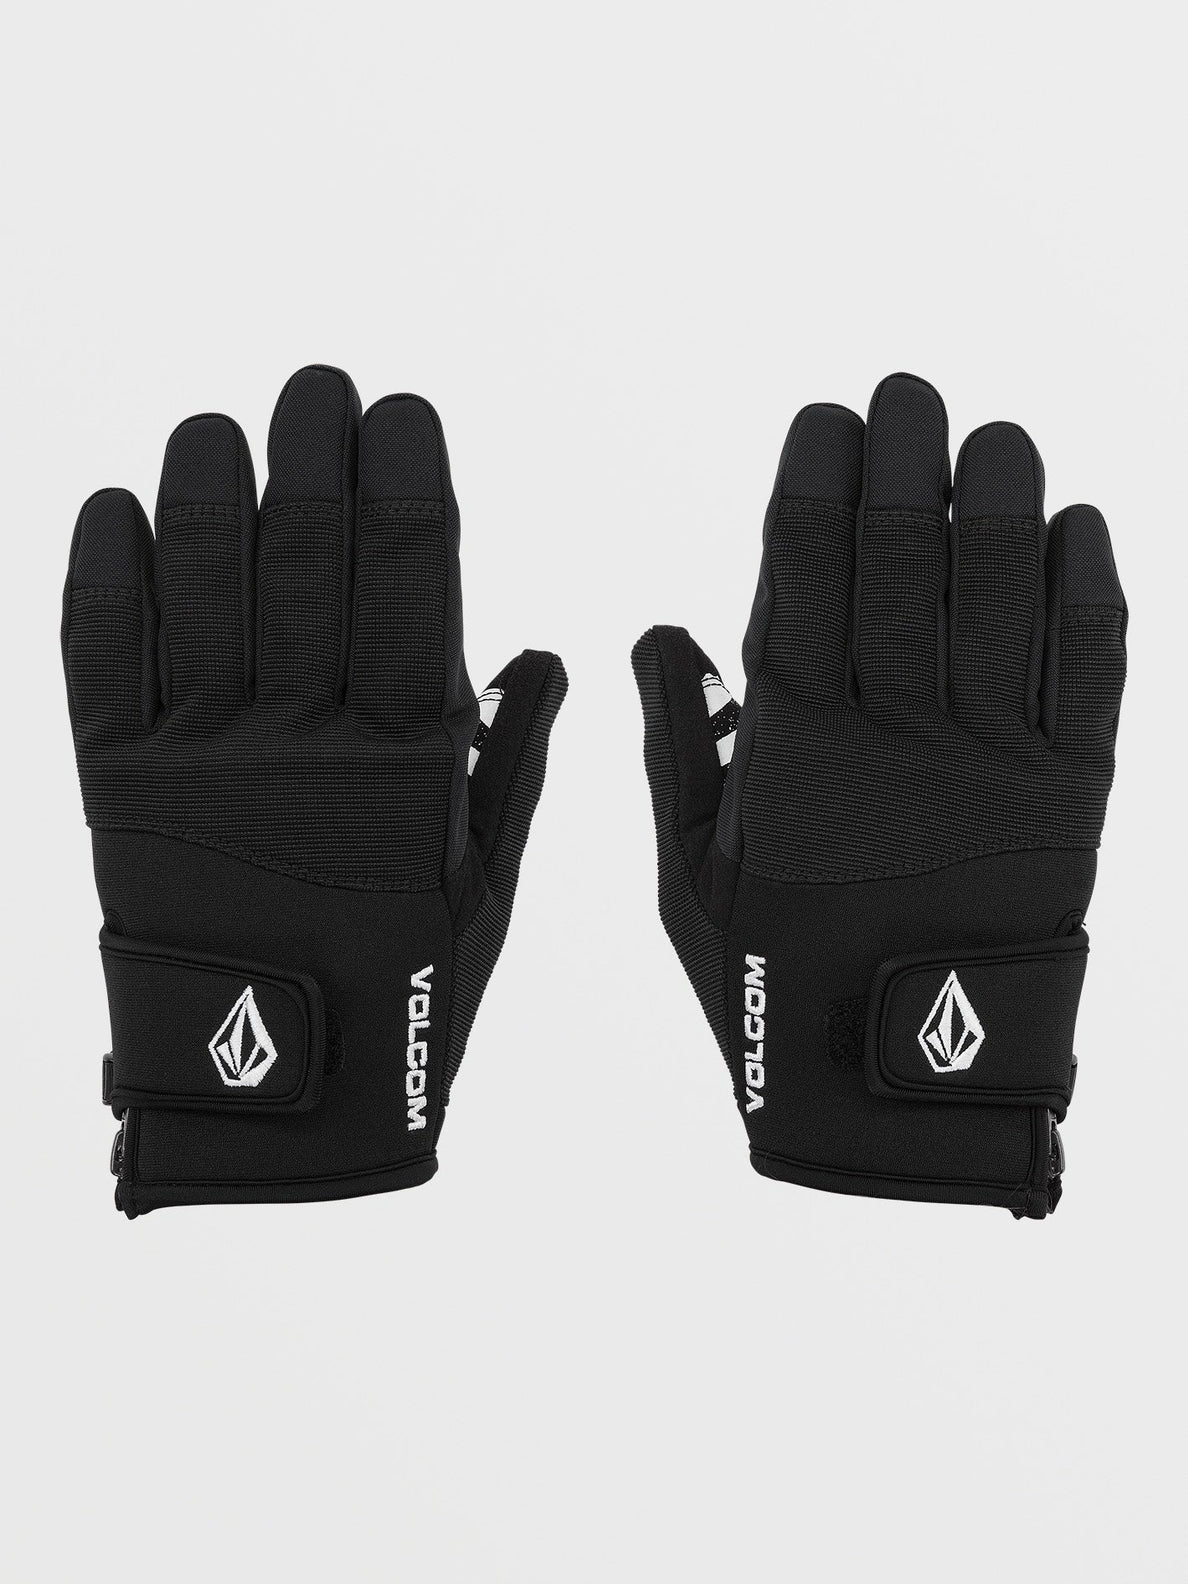 Crail Gloves - BLACK (J6852407_BLK) [F]